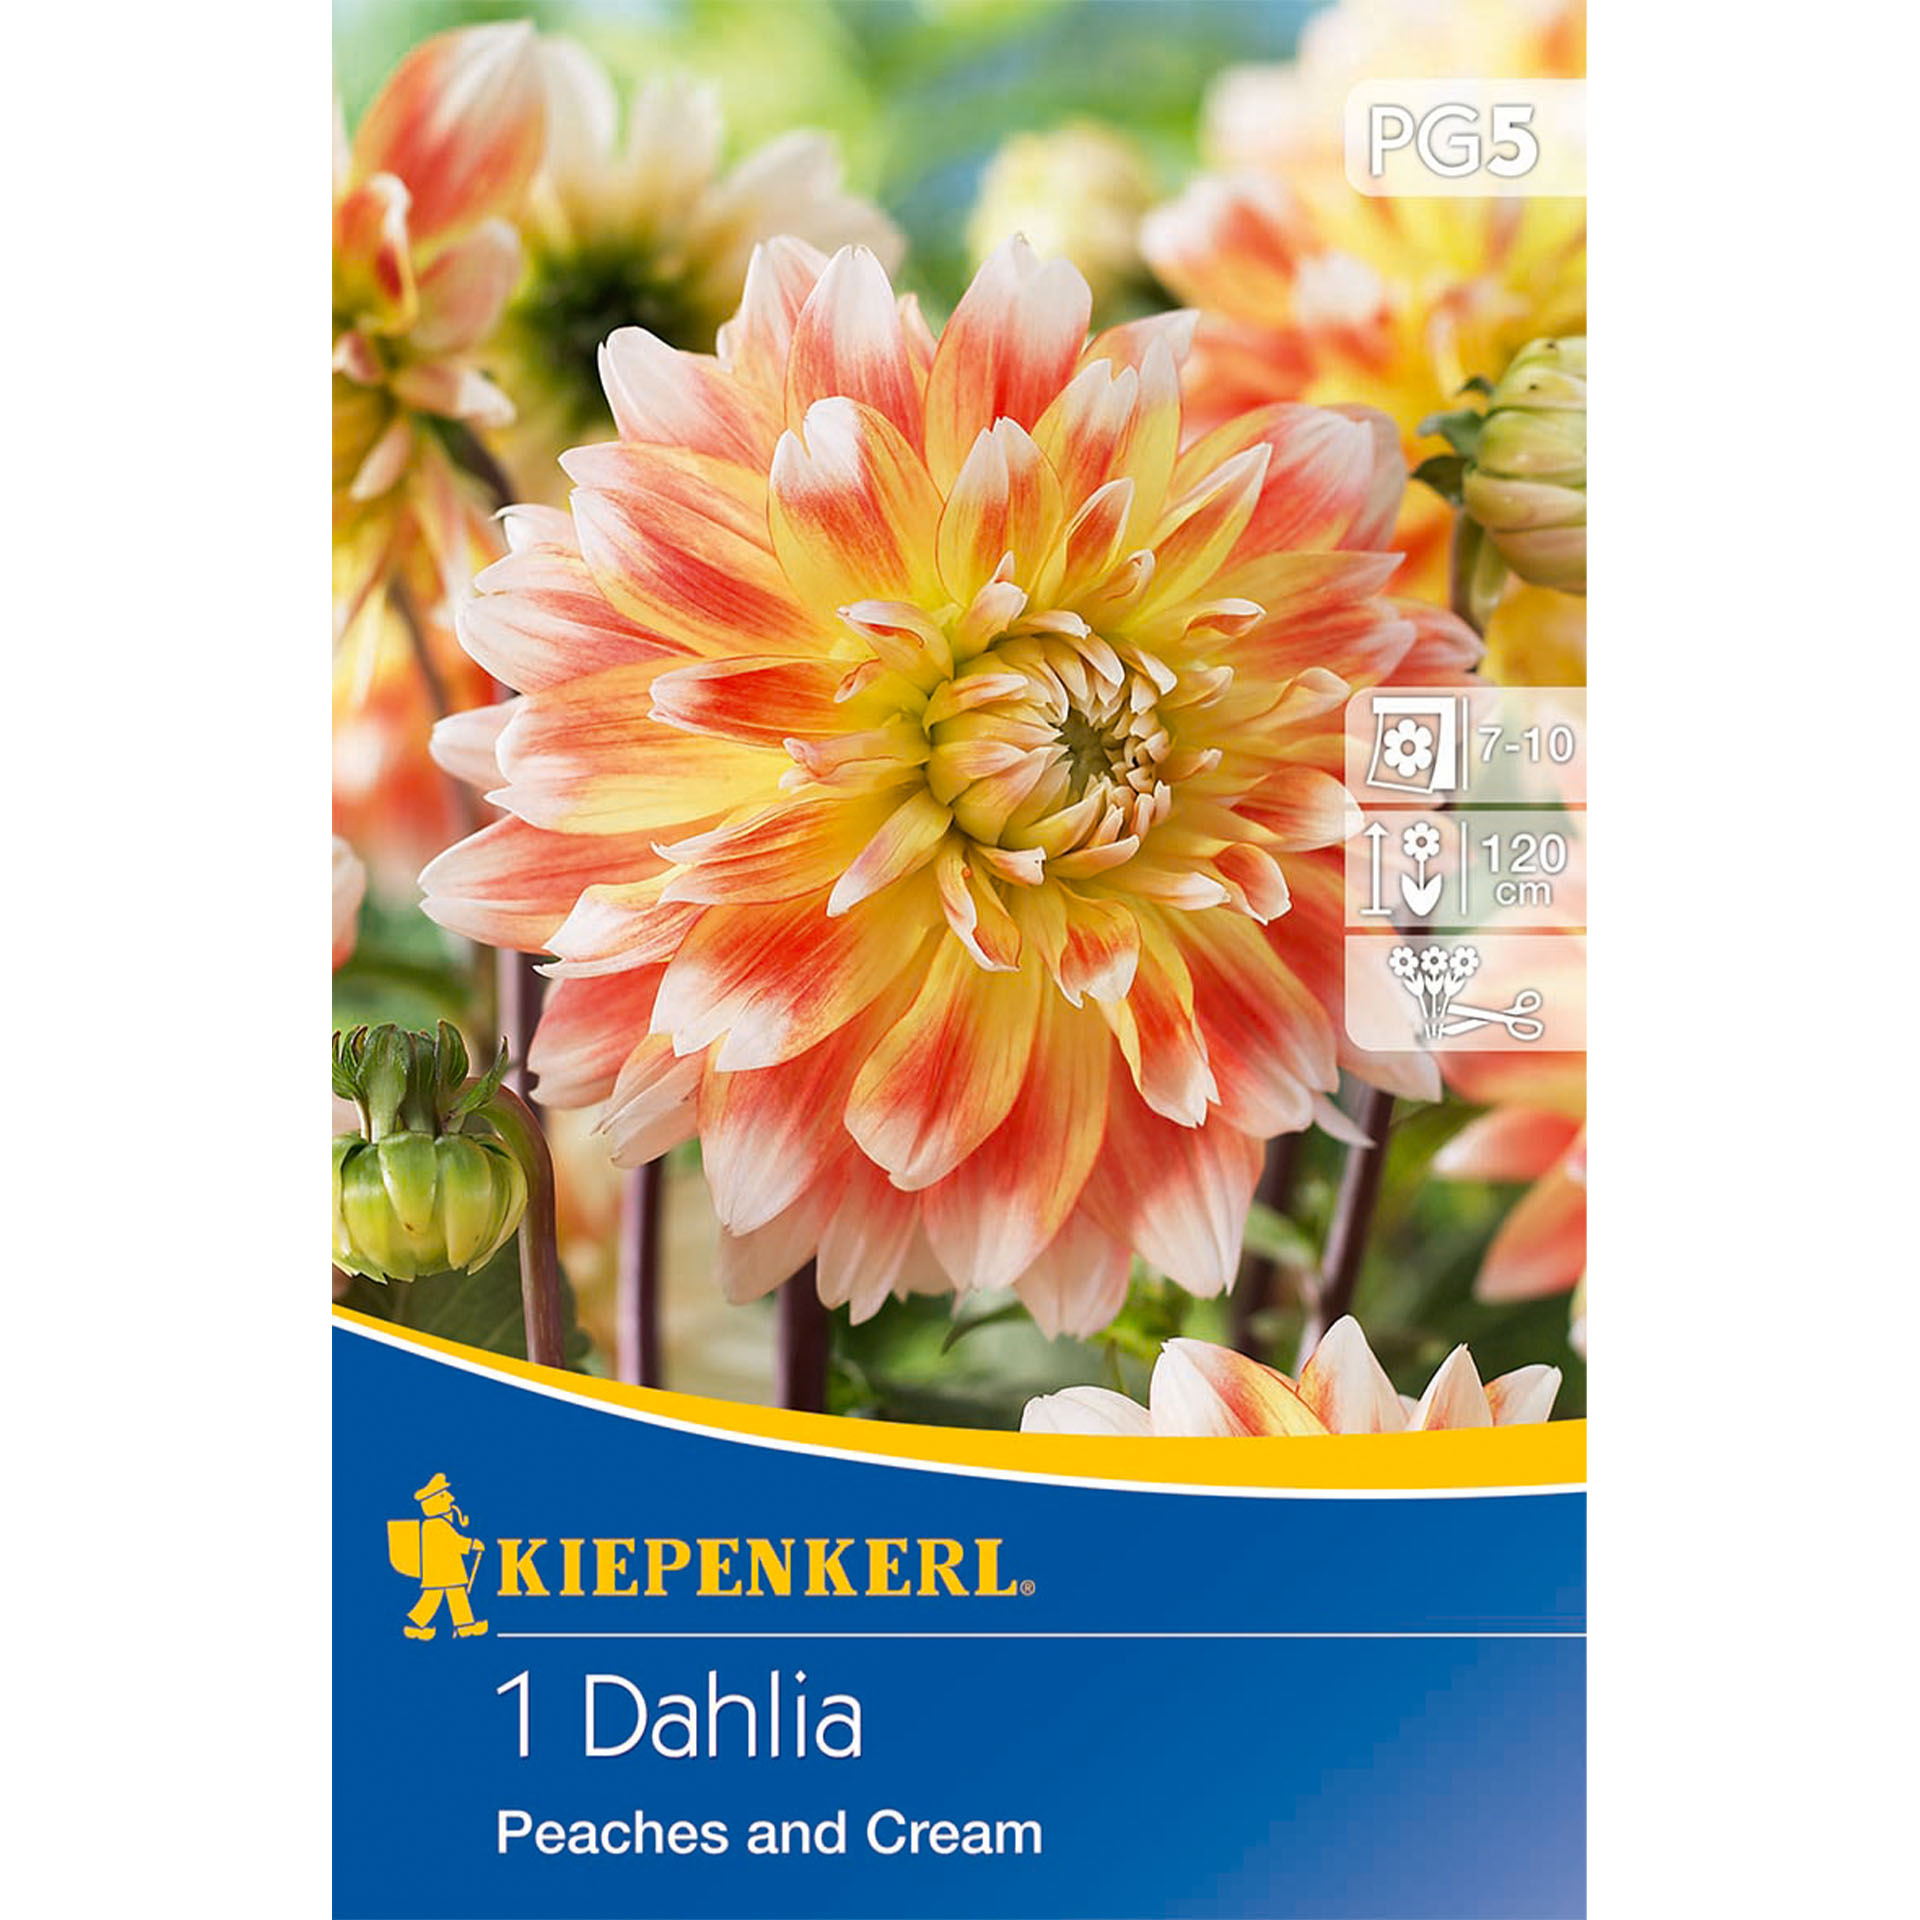 Dahlie, Blume, Pflanze